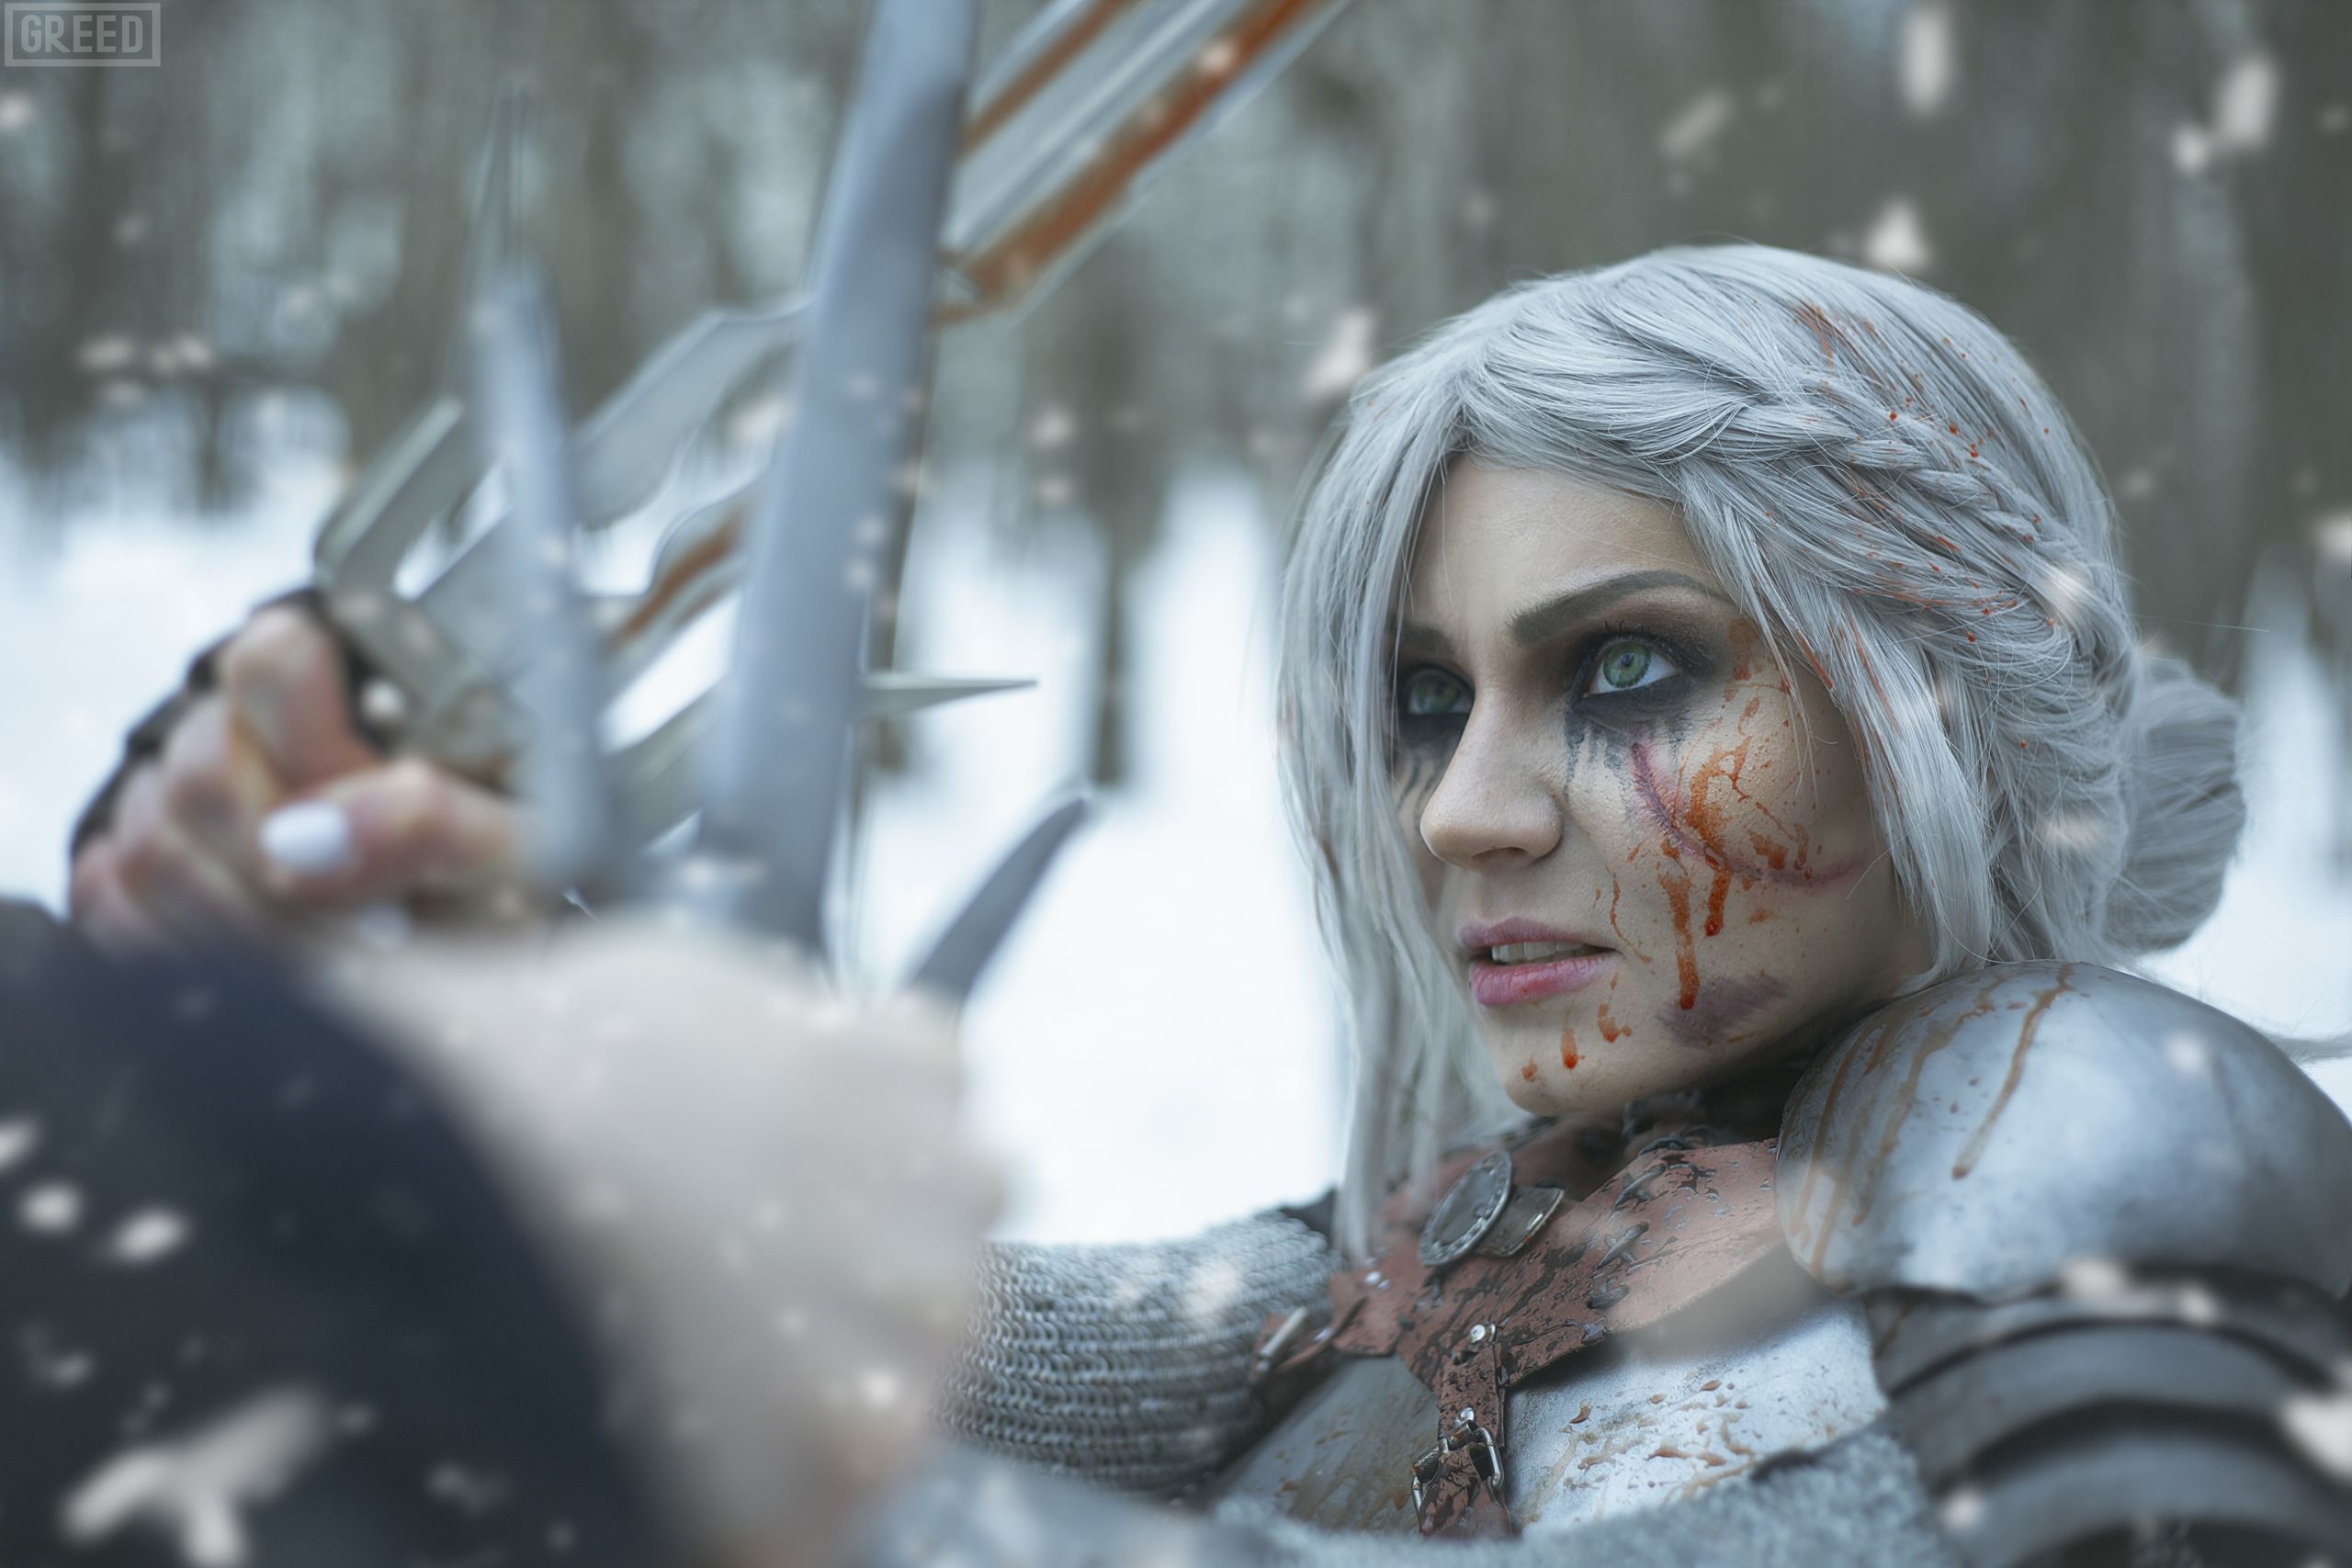 Косплей на Цири из The Witcher 3: Wild Hunt. Косплеер: Анна Сухорученко. Фотограф: GREED. Источник: https://vk.com/twenn.rogue